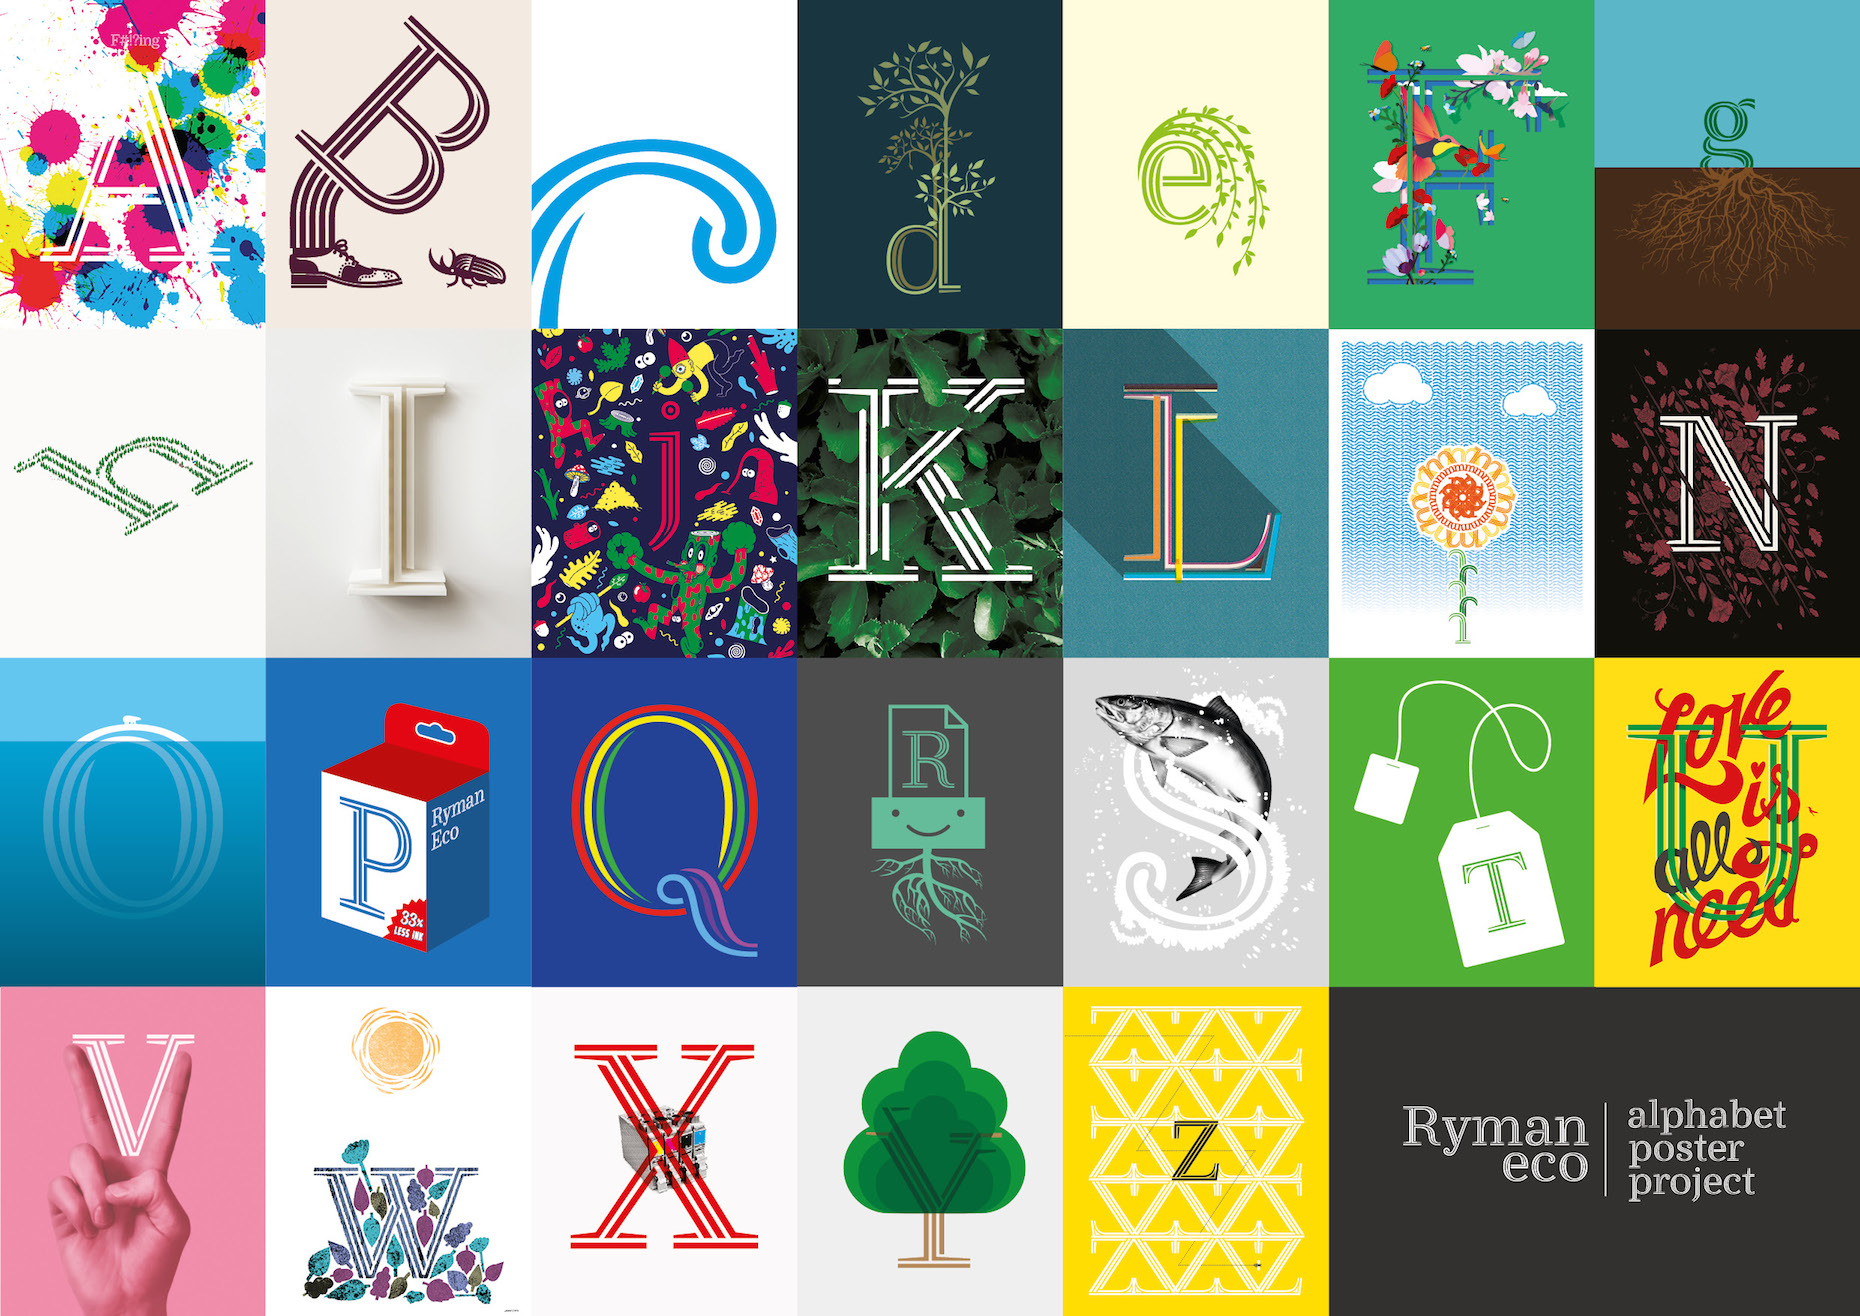 Photo: Alphabet Poster Project promotes the Ryman Eco sustainabel font